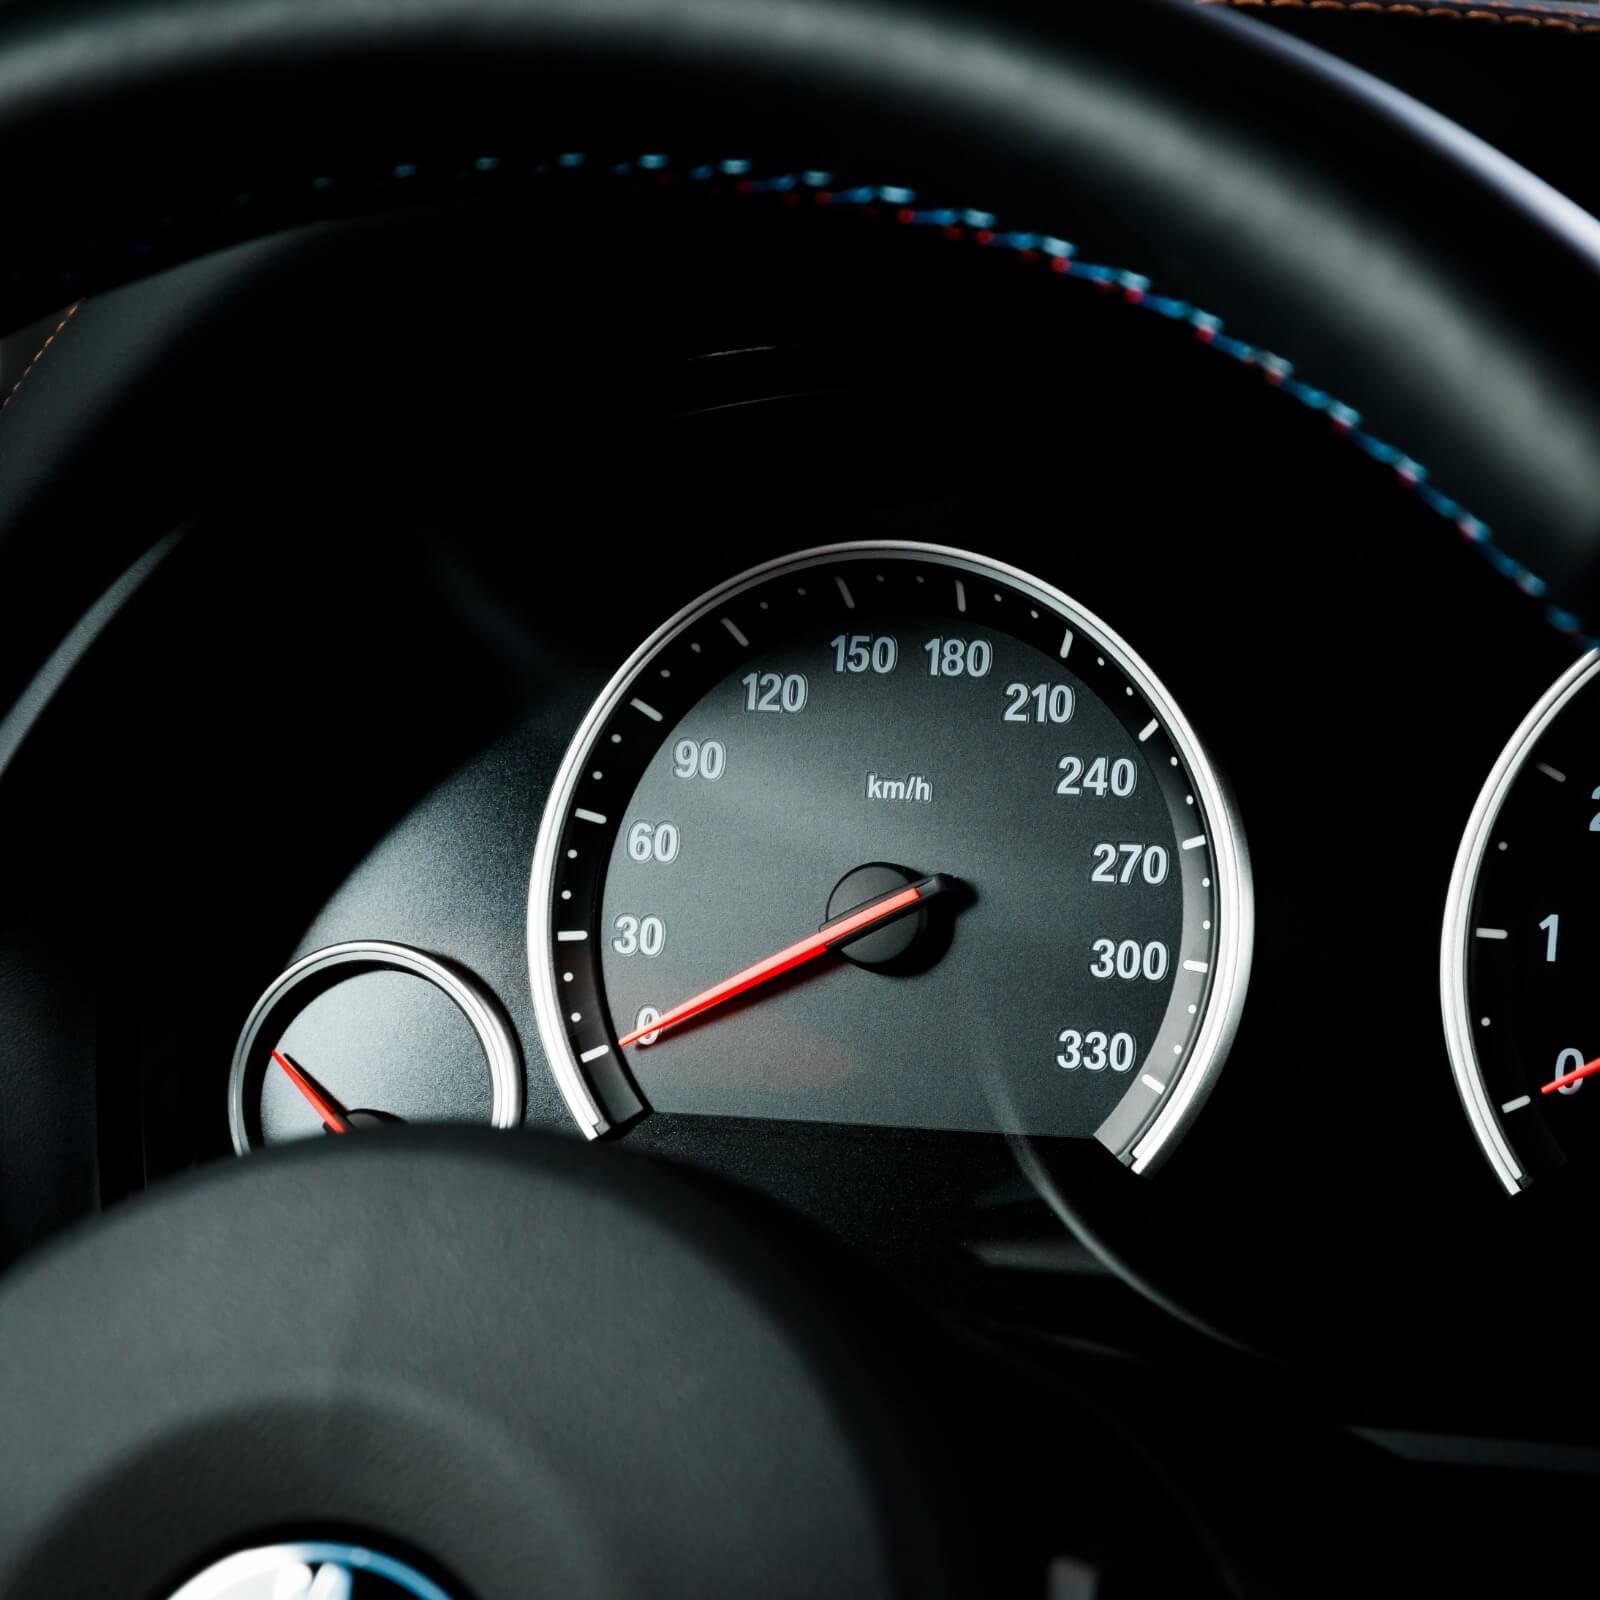 Close up shot of a speedometer in a car